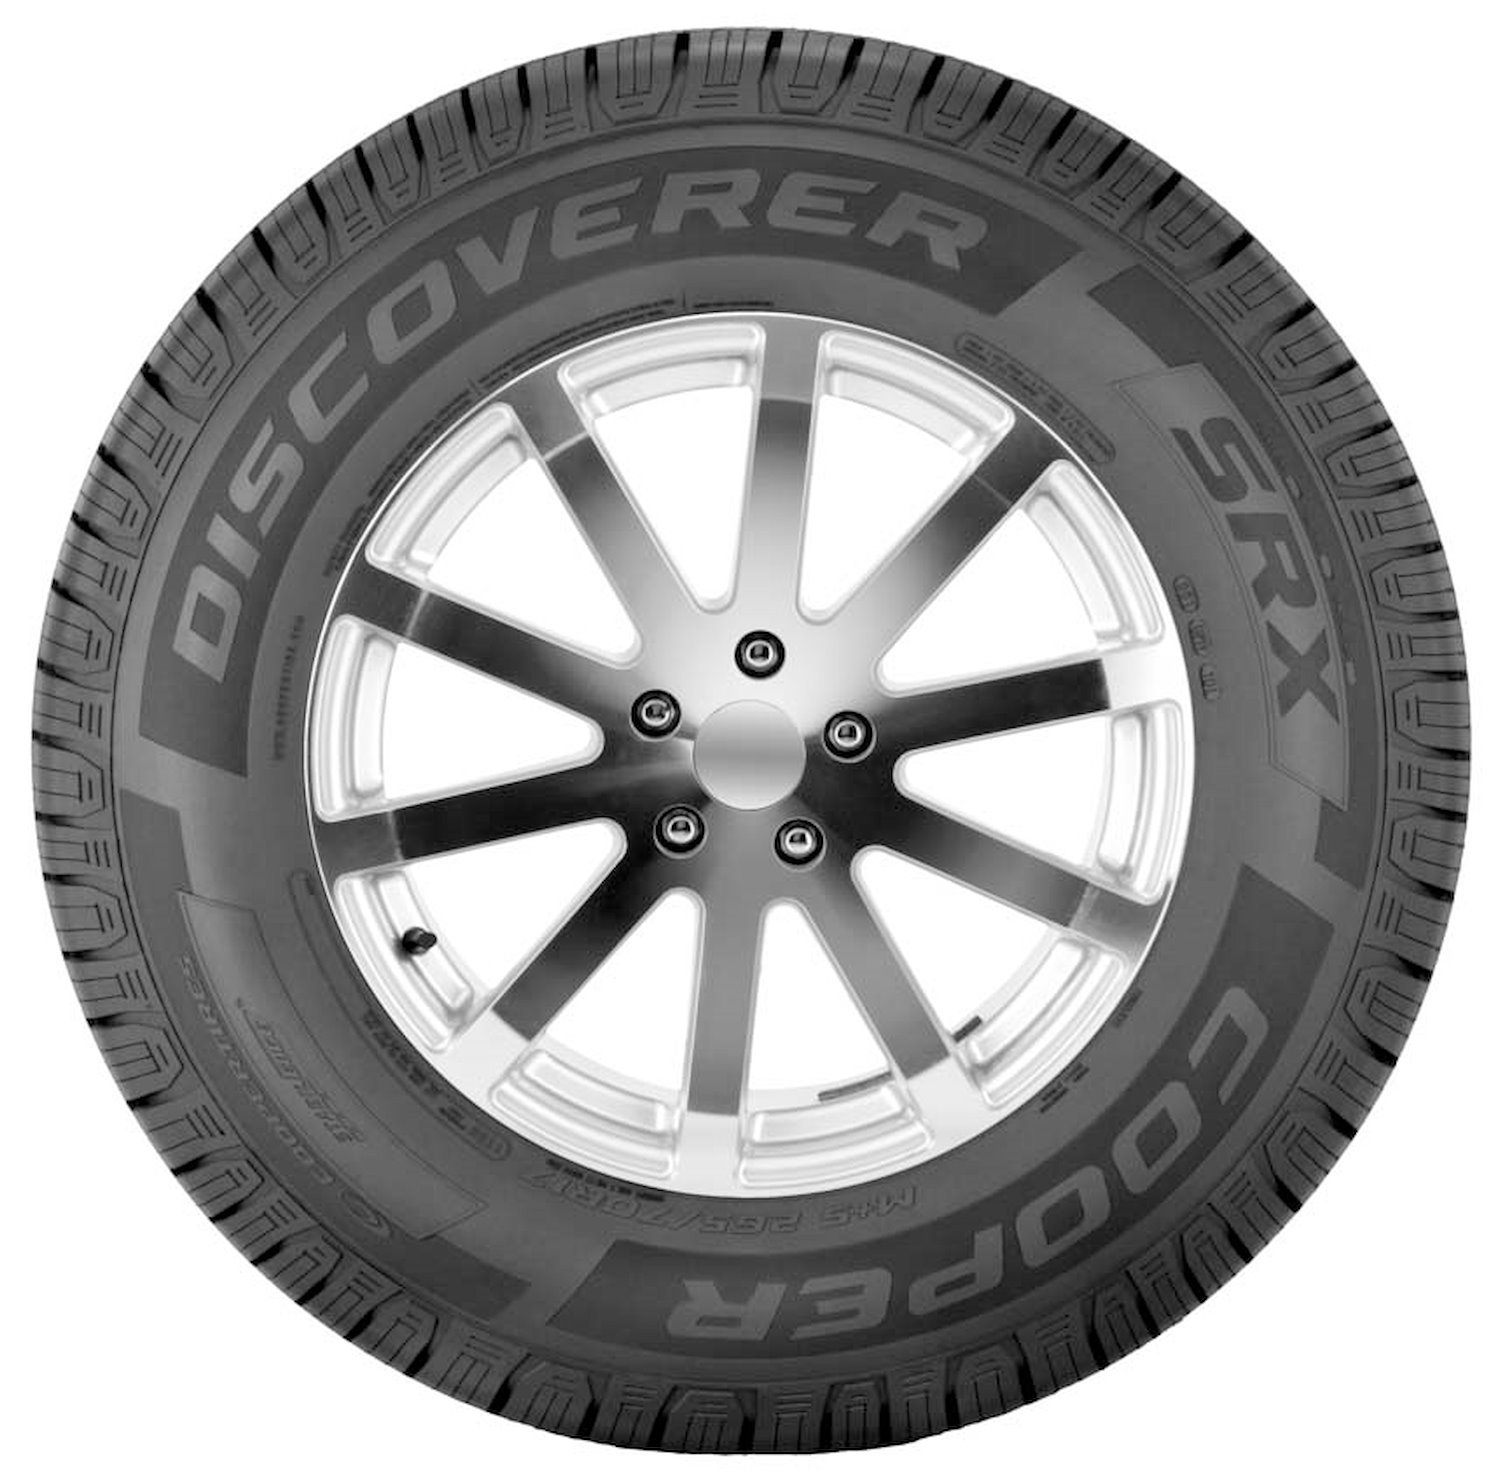 Discoverer SRX Commuter/Touring Tire, 255/70R17